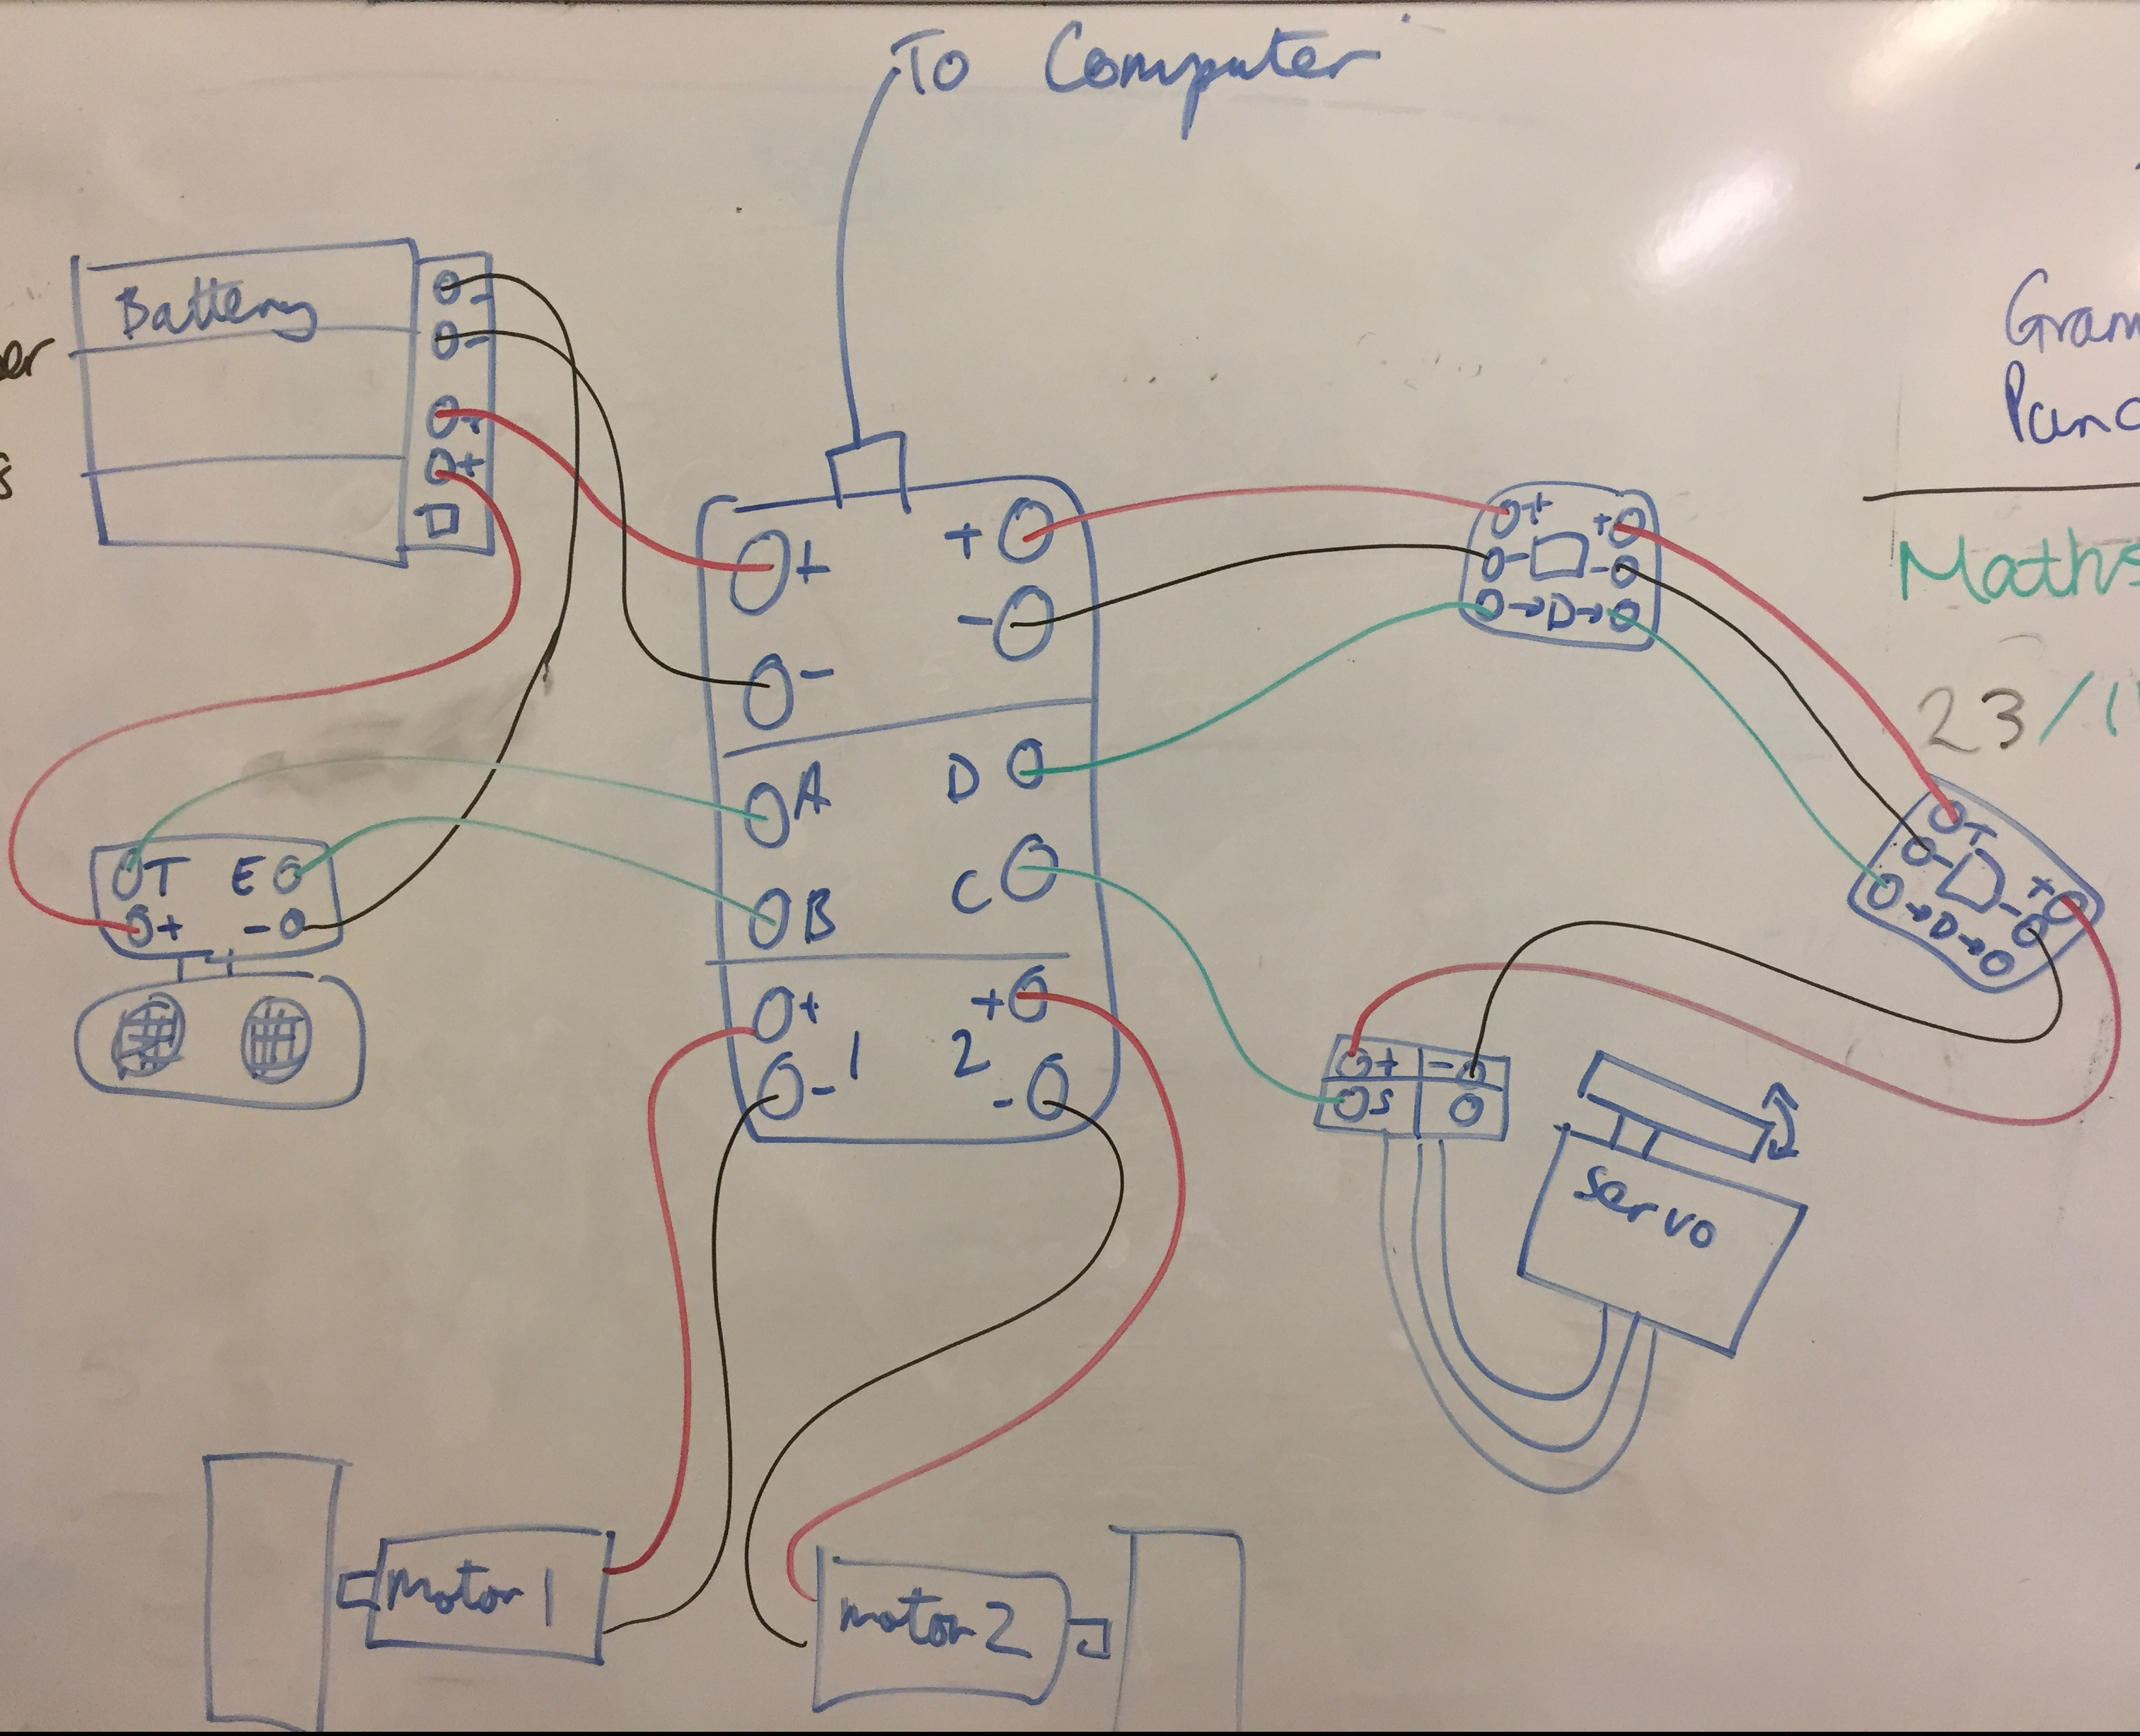 Primary Computing crumble wiring diagram 2